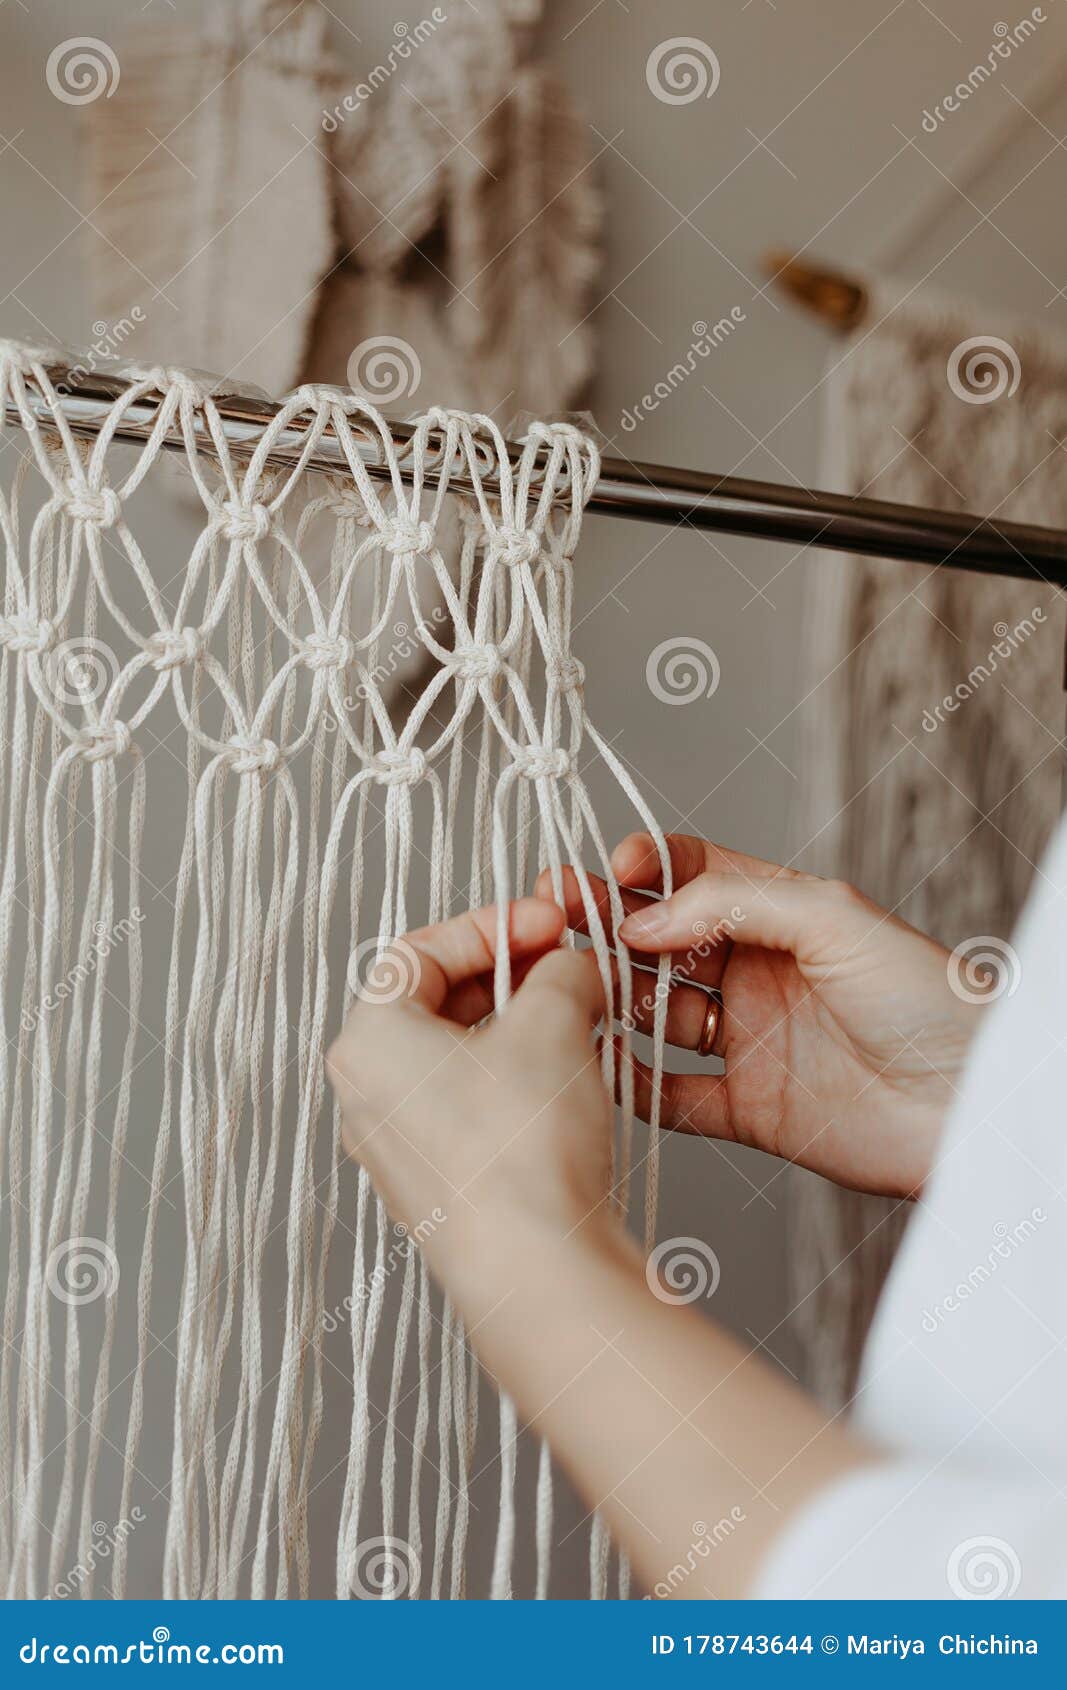 the process of weaving macrame. hands weave macrame decor